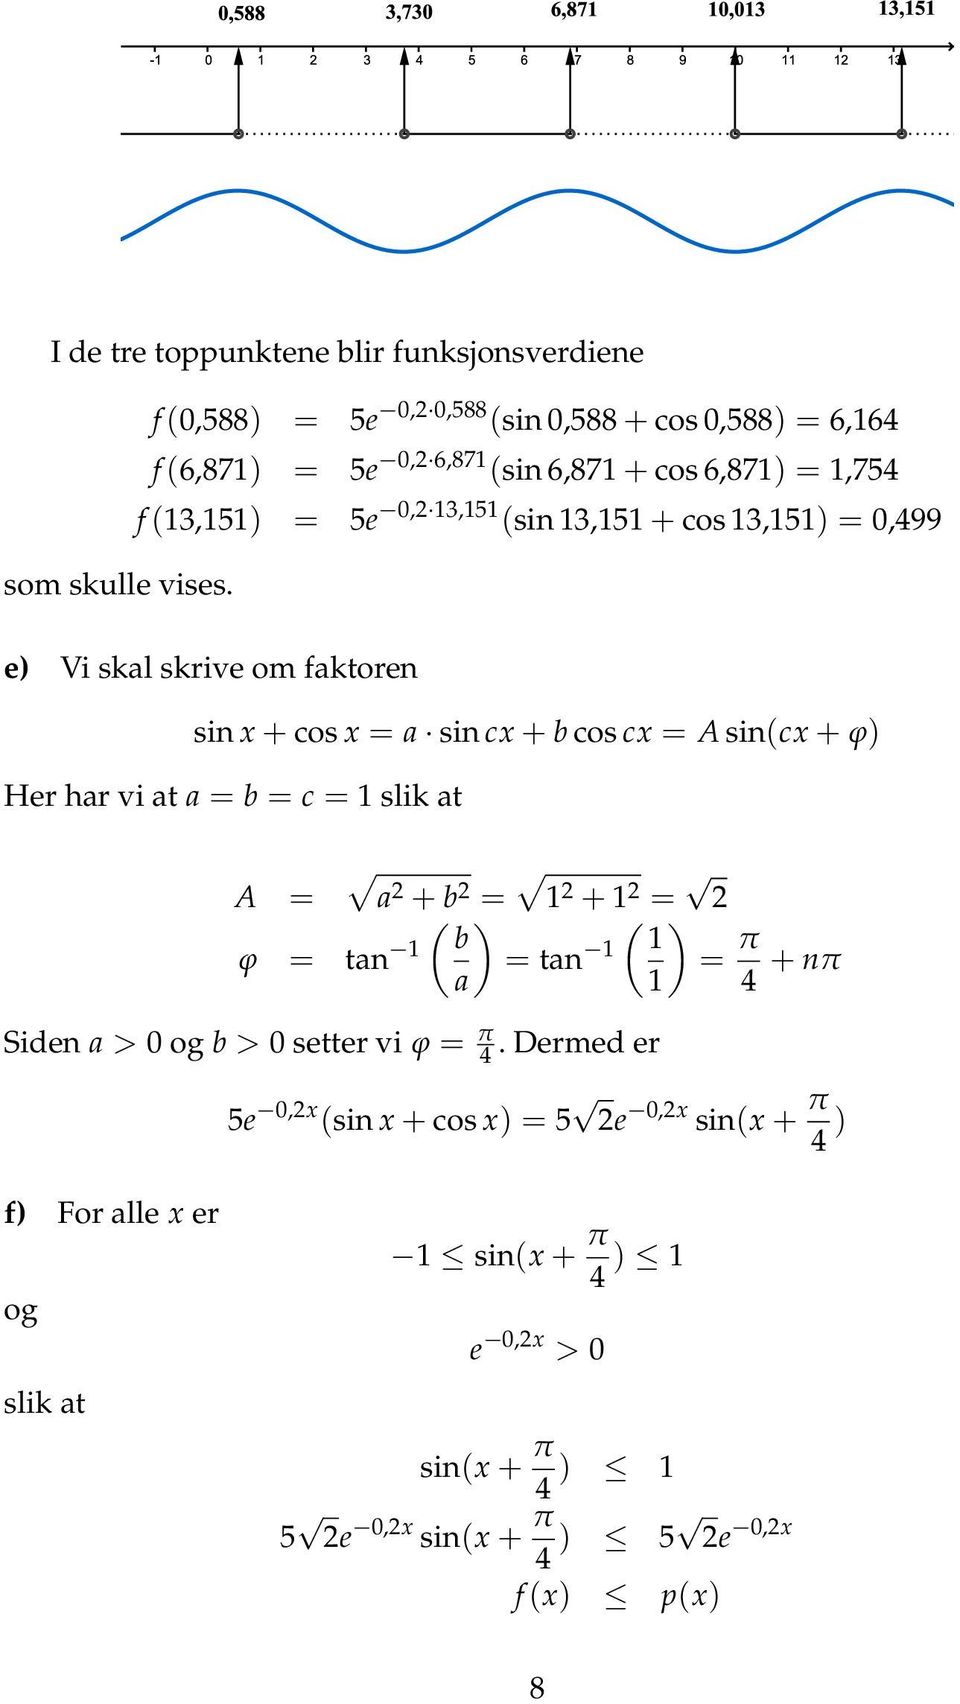 e) Vi skal skrive om faktoren sin x + cos x = a sin cx + b cos cx = A sin(cx + ϕ) Her har vi at a = b = c = 1 slik at A = a + b = 1 + 1 = ( ) ( ) b 1 ϕ =